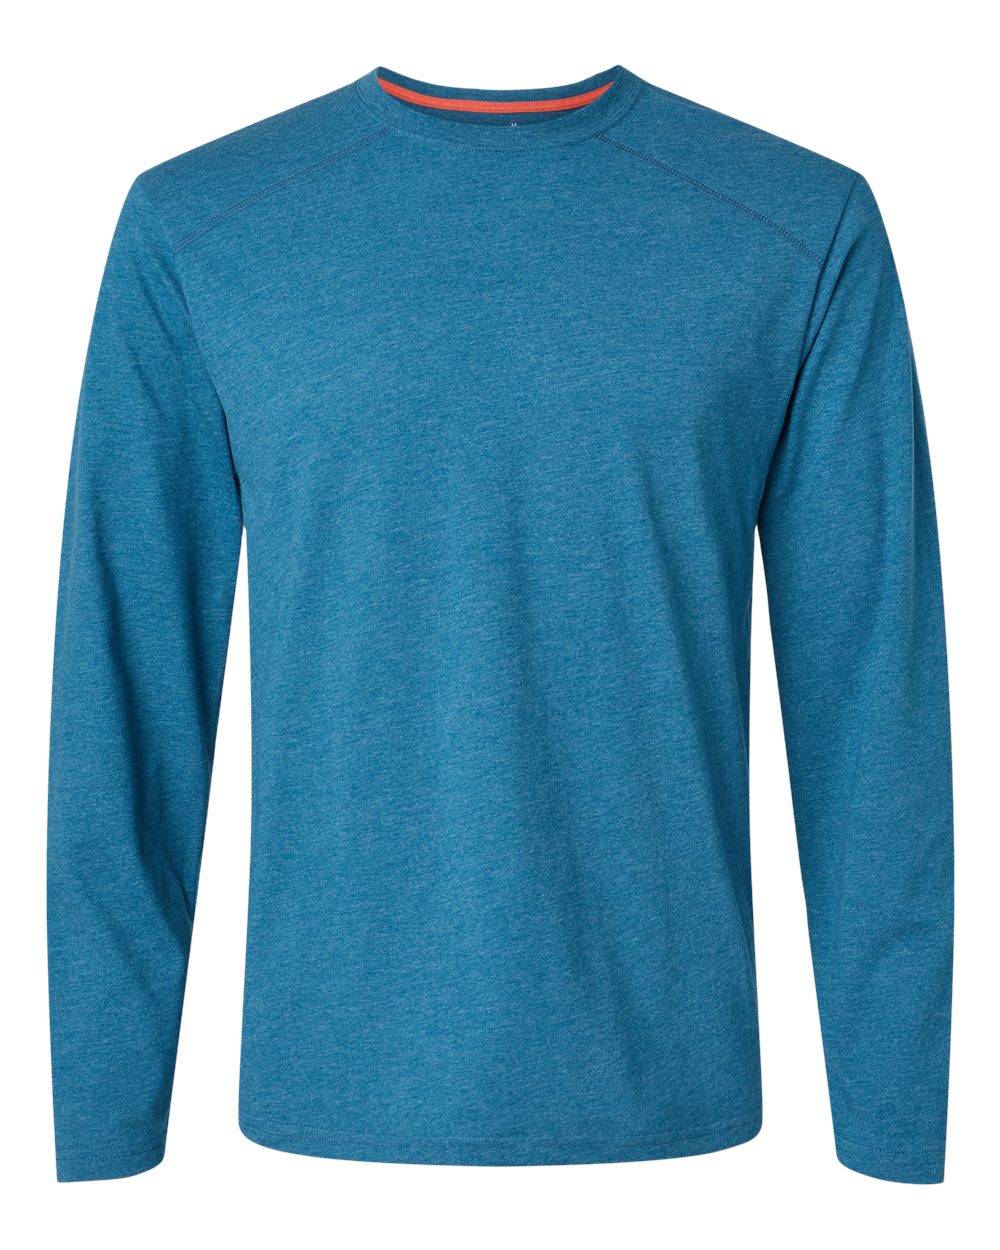 Customizable kastlfel recycledsoft long sleeve shirt in breaker blue.